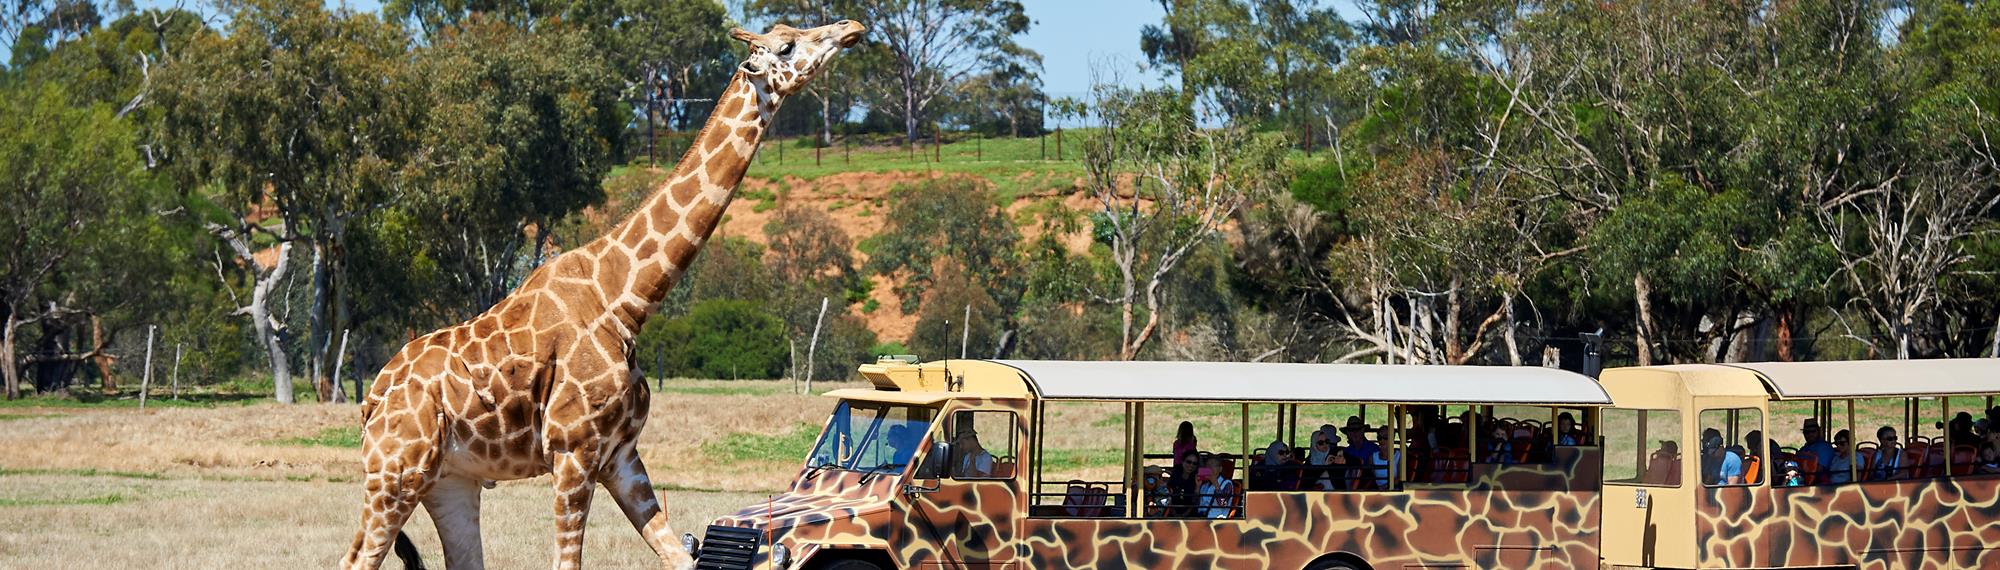 wild animal safari bus schedule